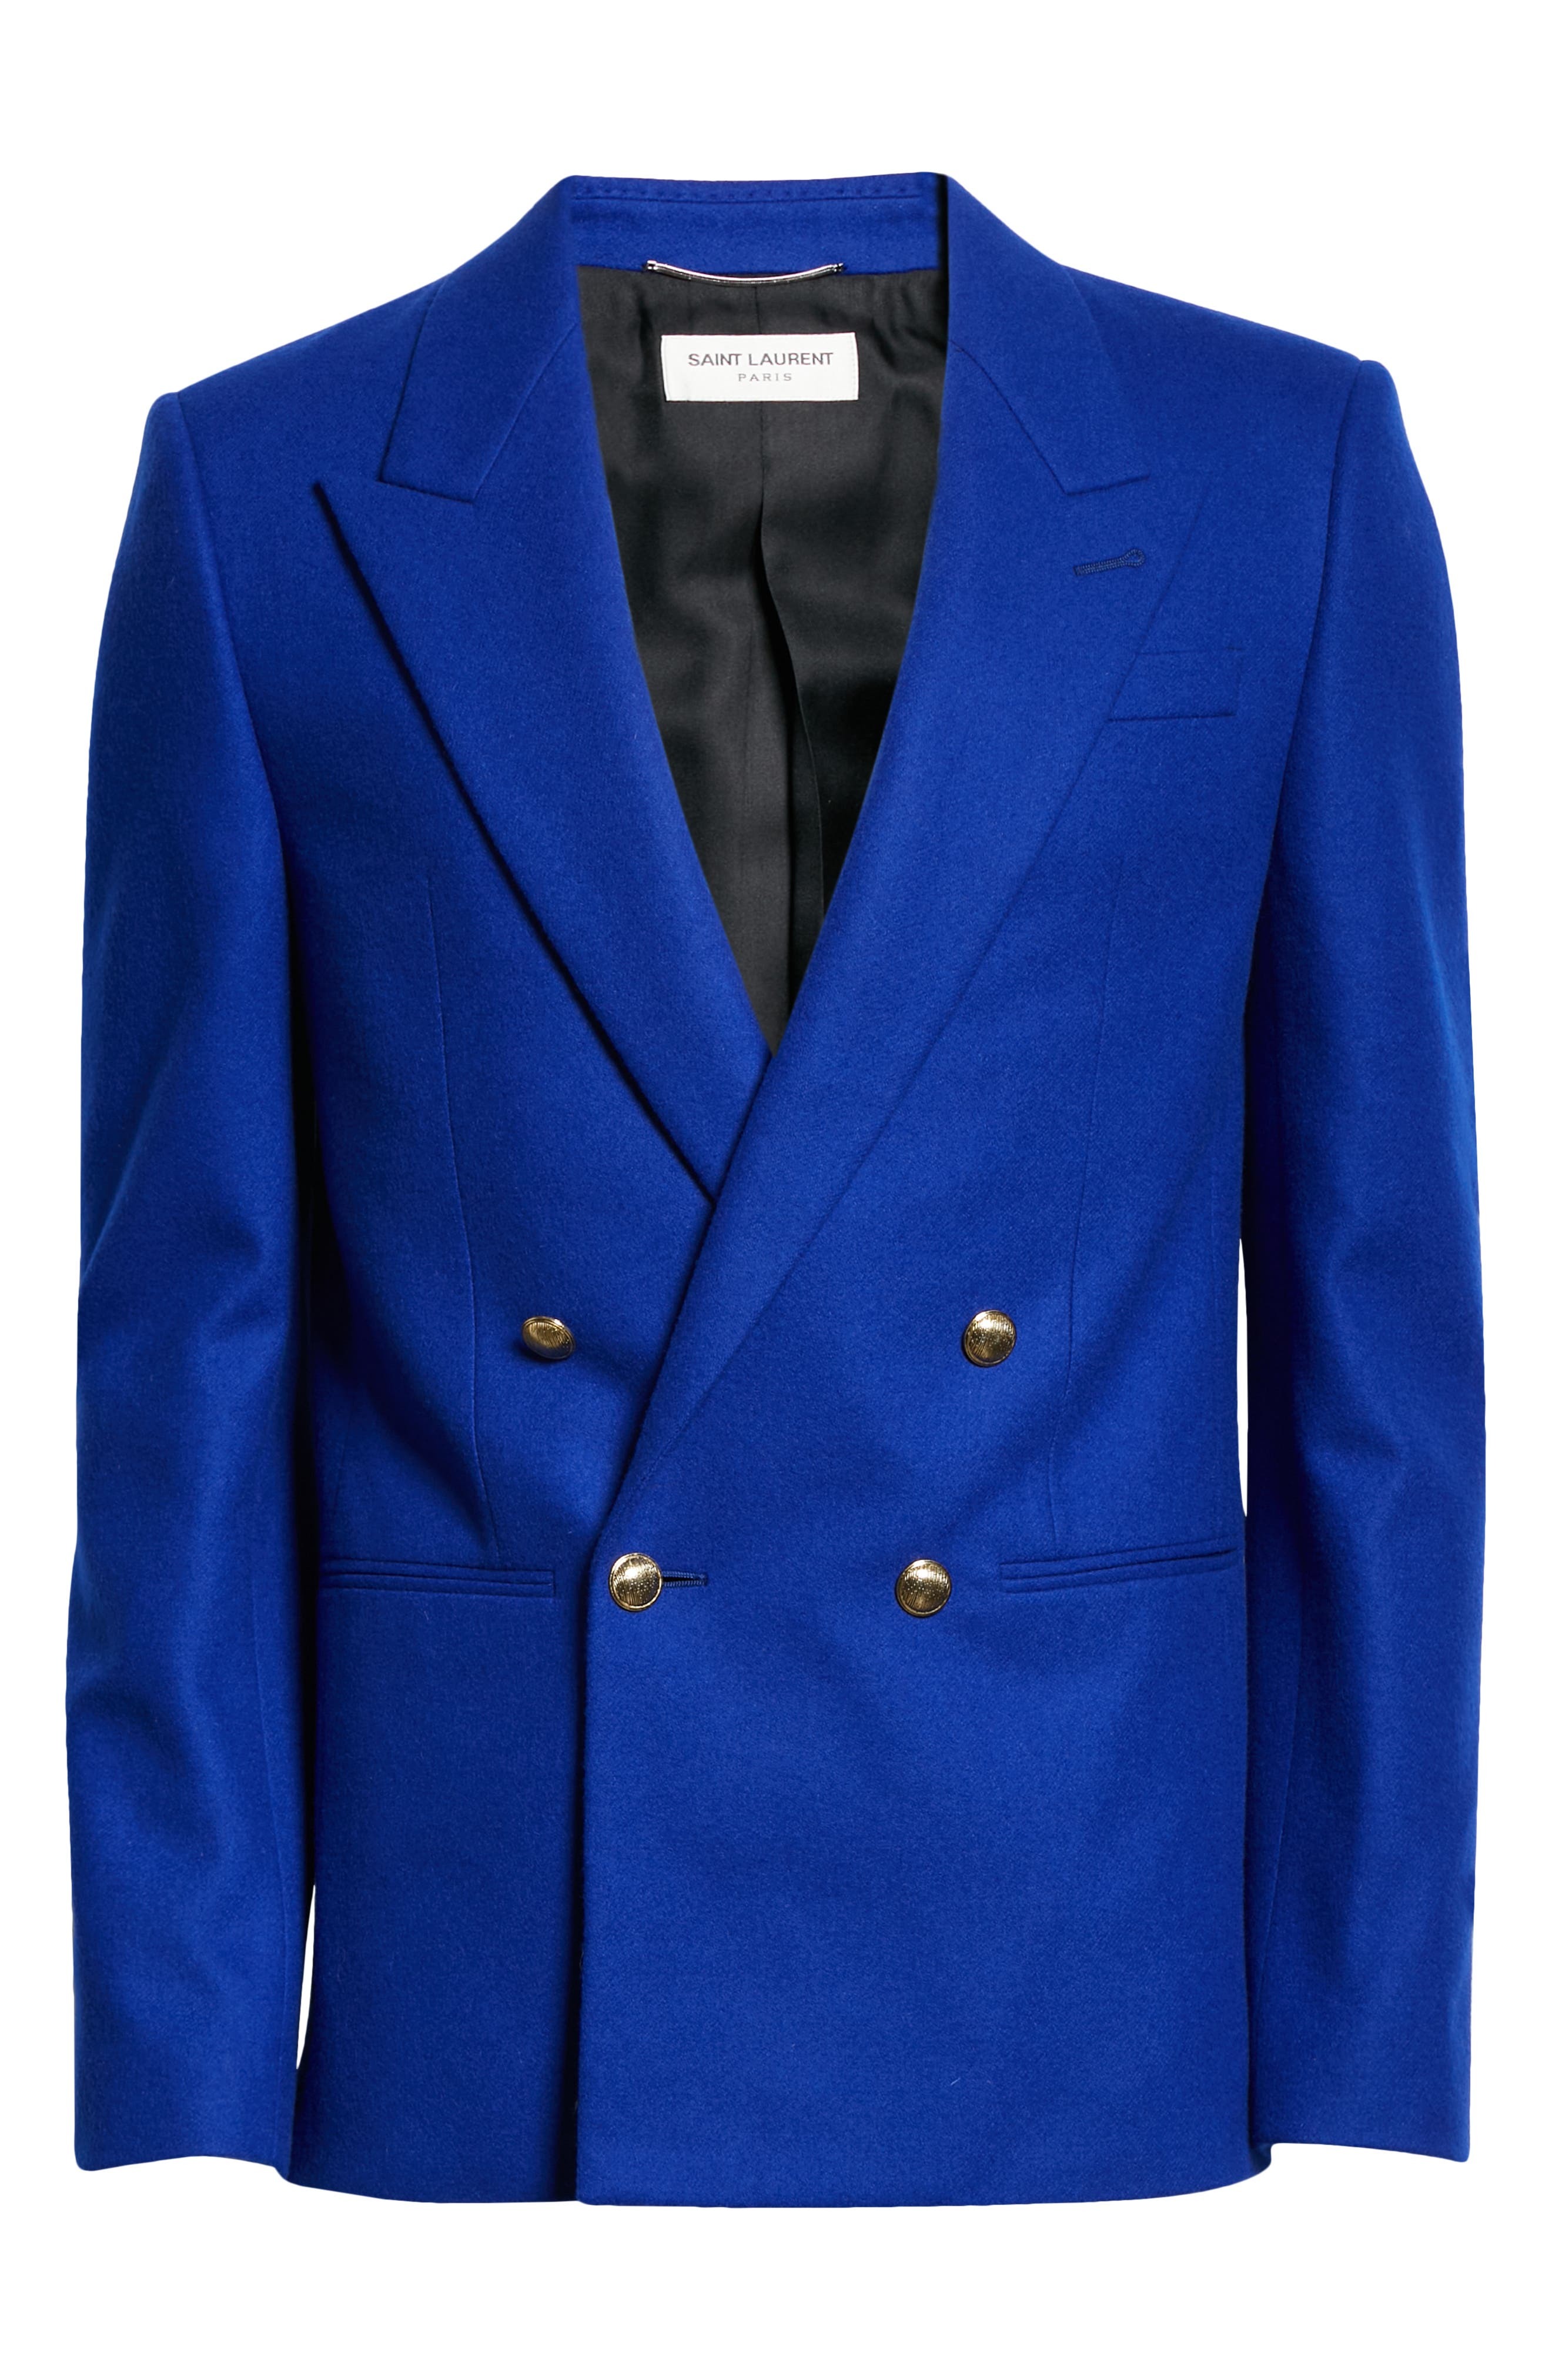 Saint Laurent Double Breasted Wool Blend Sport Coat, $2,990 | Nordstrom ...